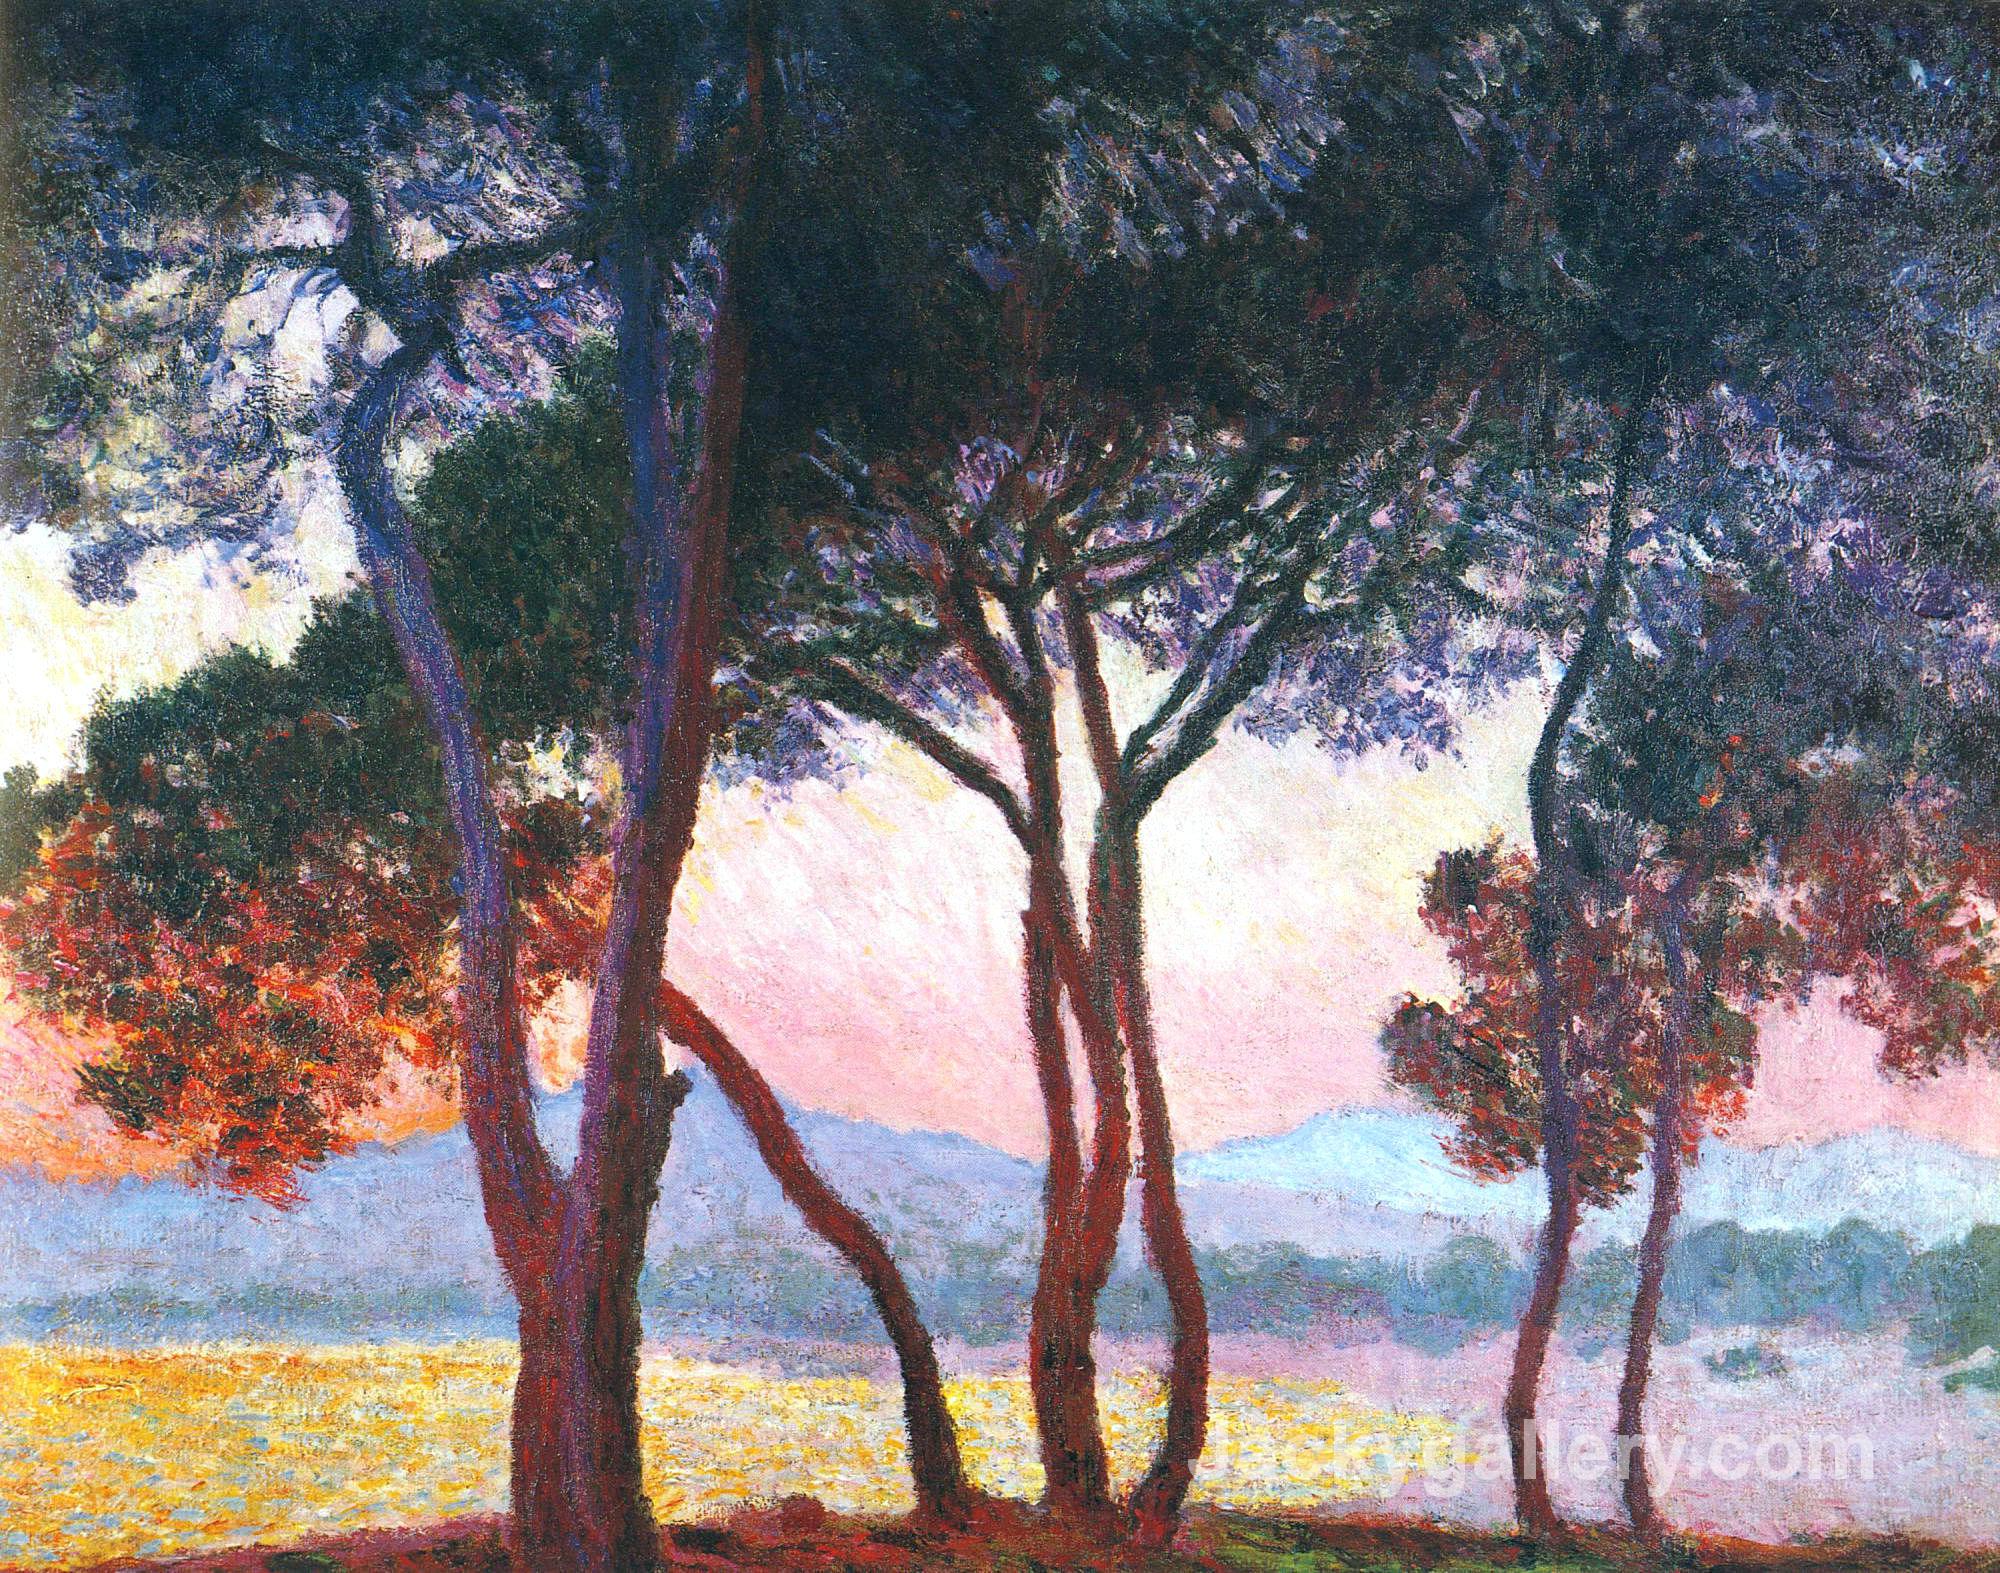 Juan-les-Pins by Claude Monet paintings reproduction